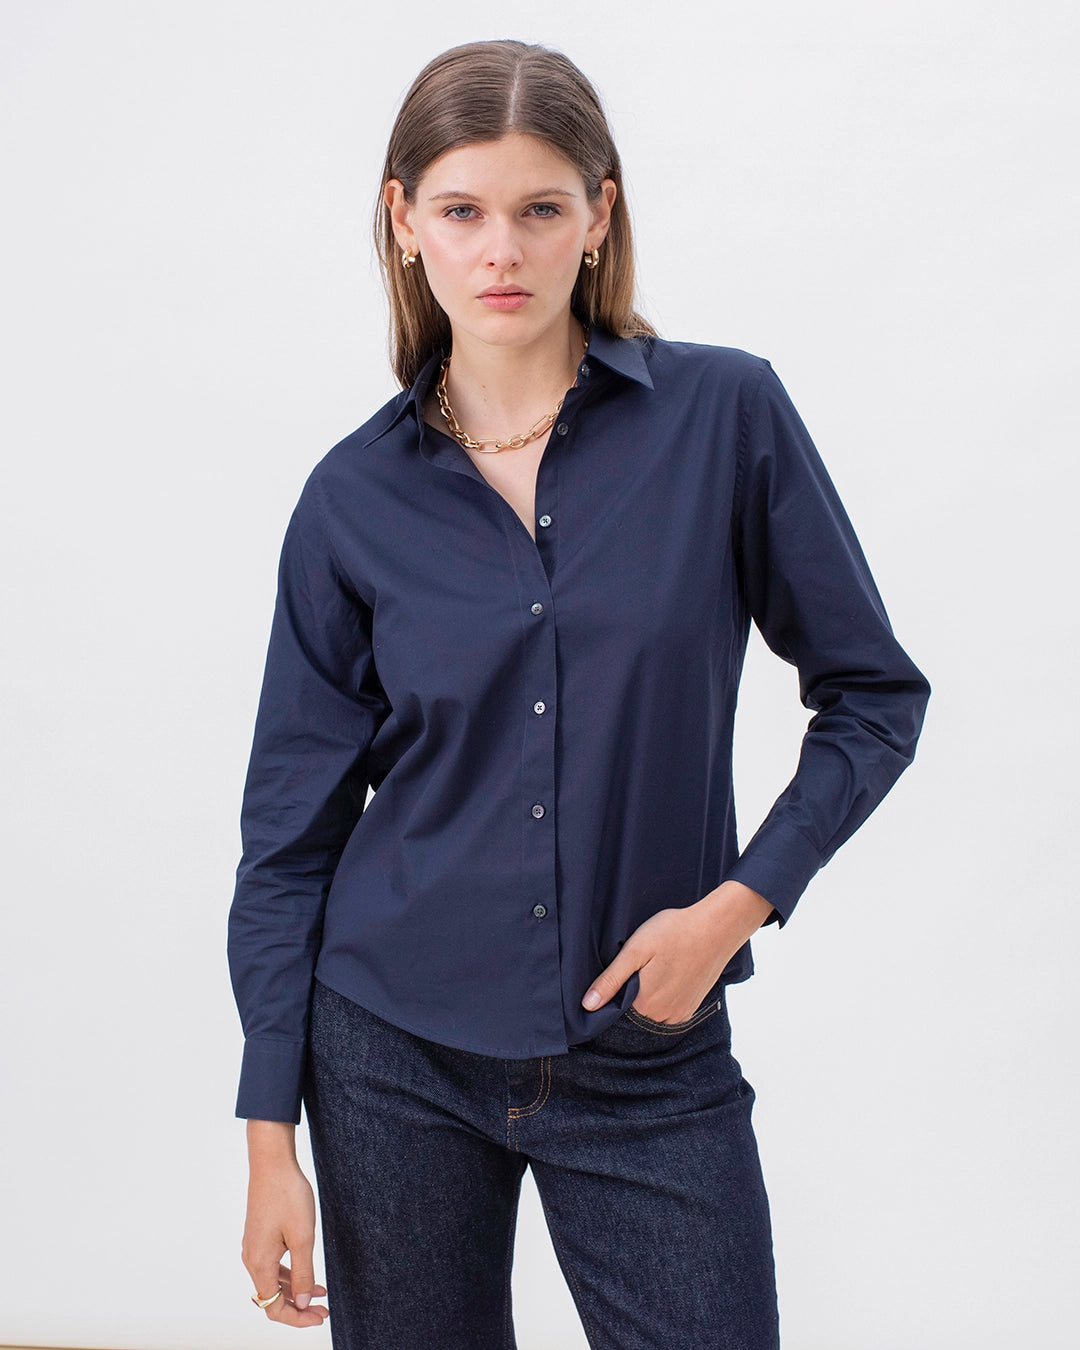 shirt-hudson-night-blue-italian-collar-poplin-cotton-knit-woman-1